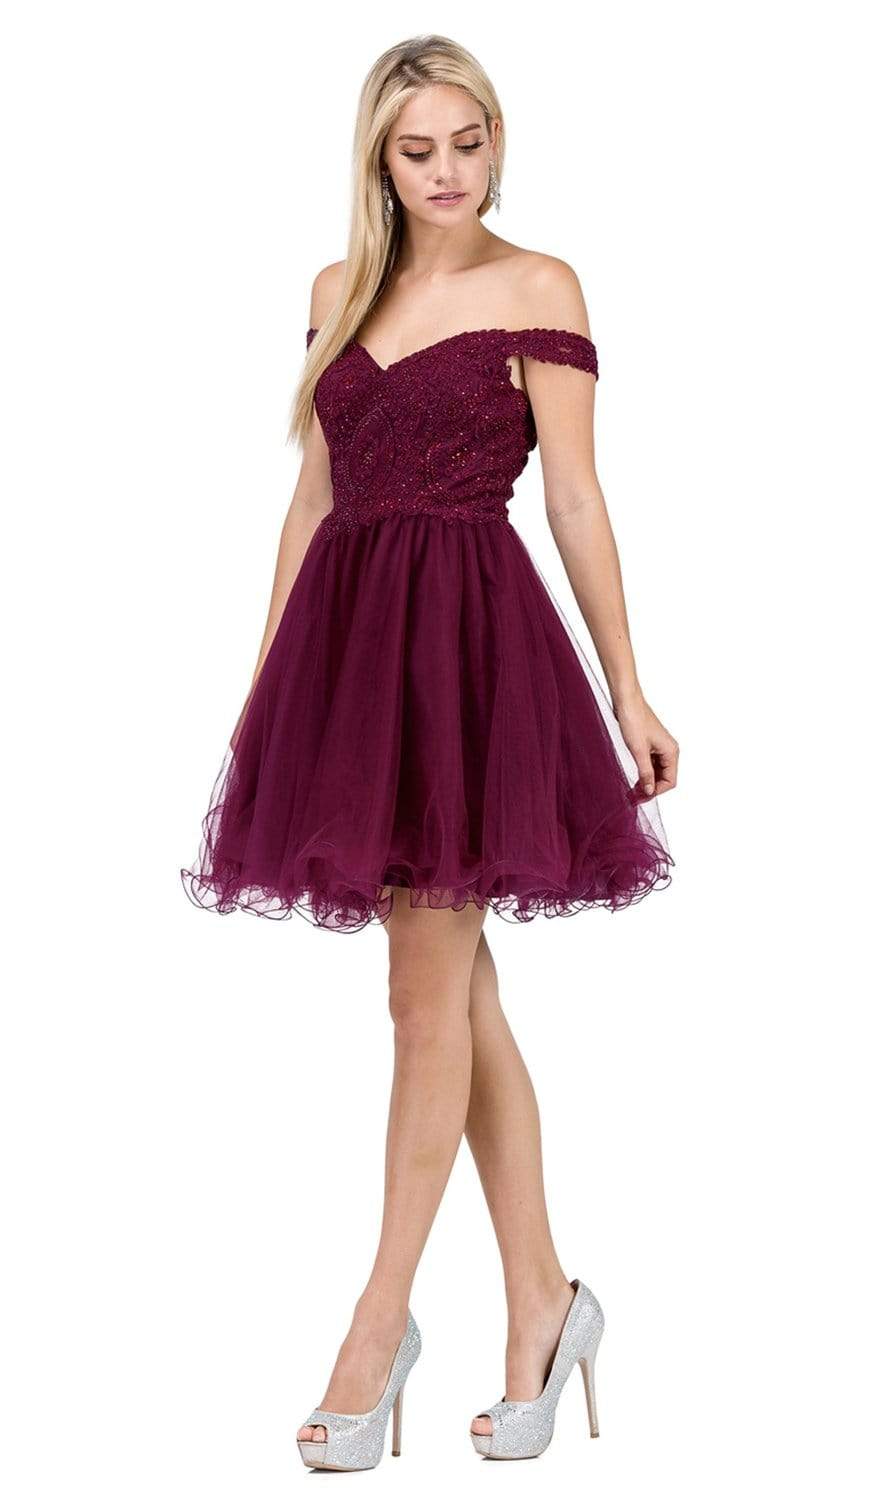 Dancing Queen - 3070 Beaded Lace Off Shoulder Cocktail Dress
